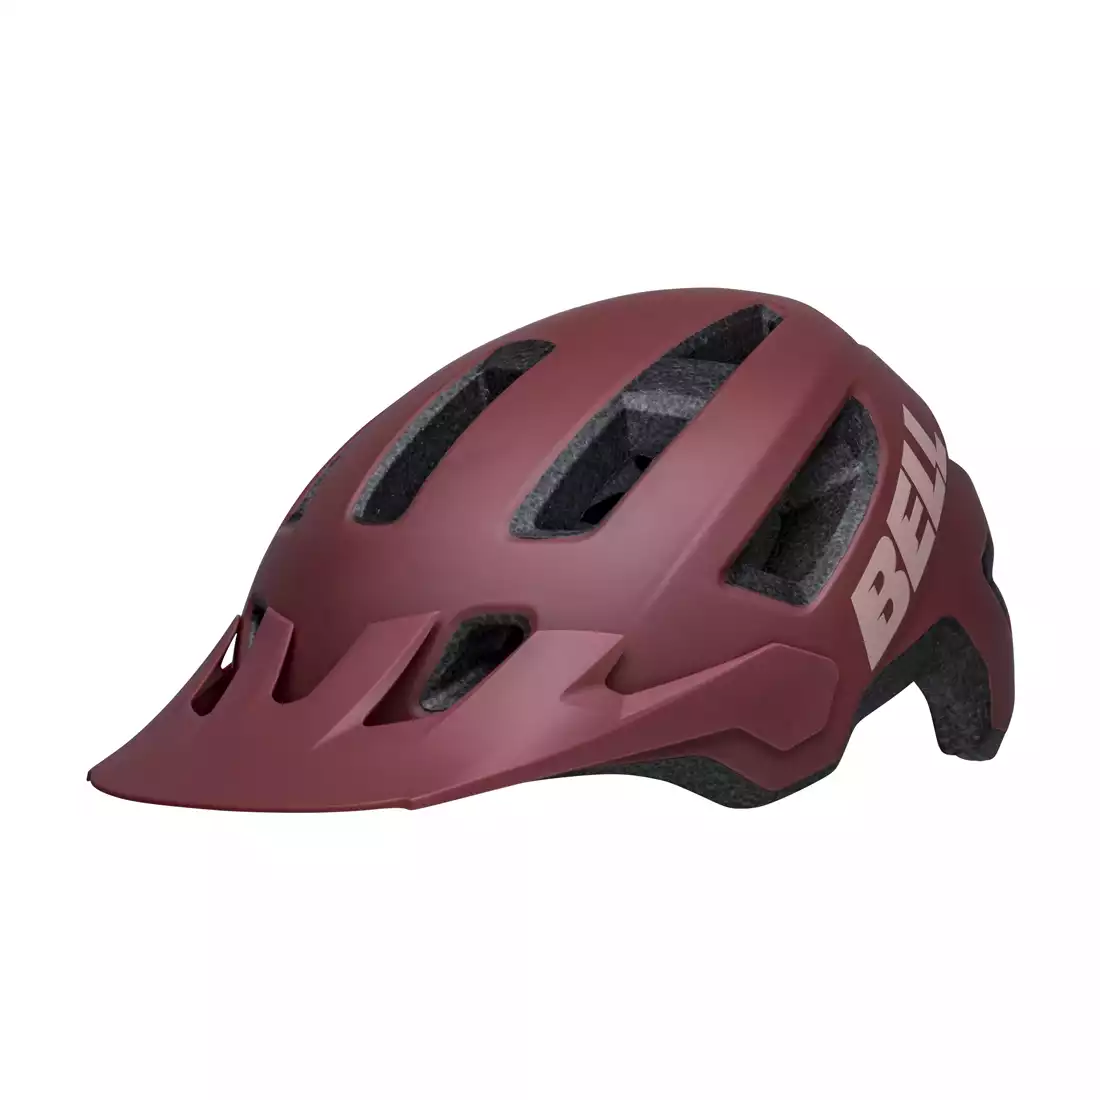 BELL NOMAD 2 INTEGRATED MIPS mtb helmet, burgundy color